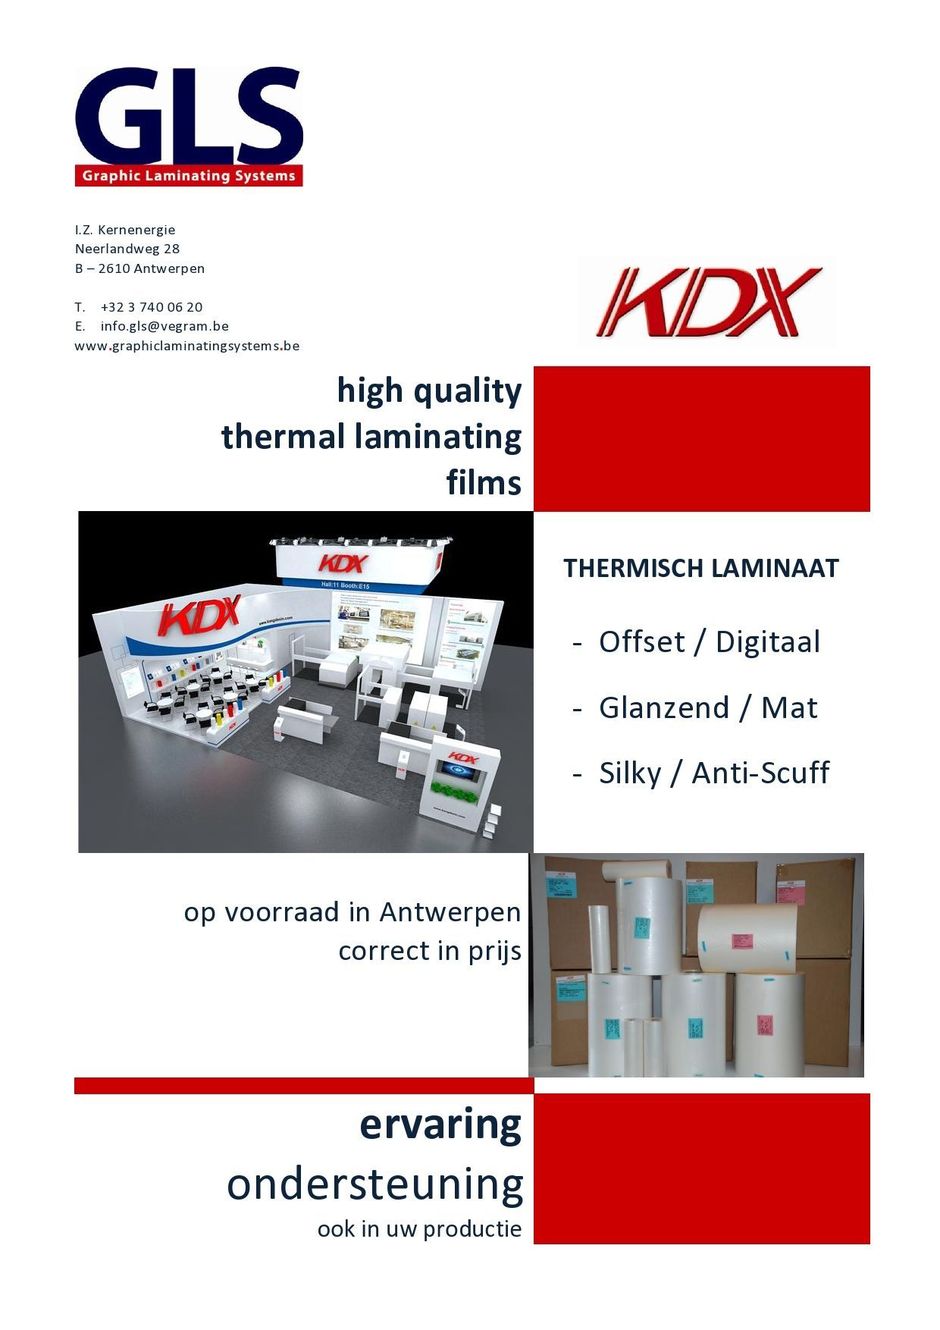 GLS levert KDX premium thermisch laminaat